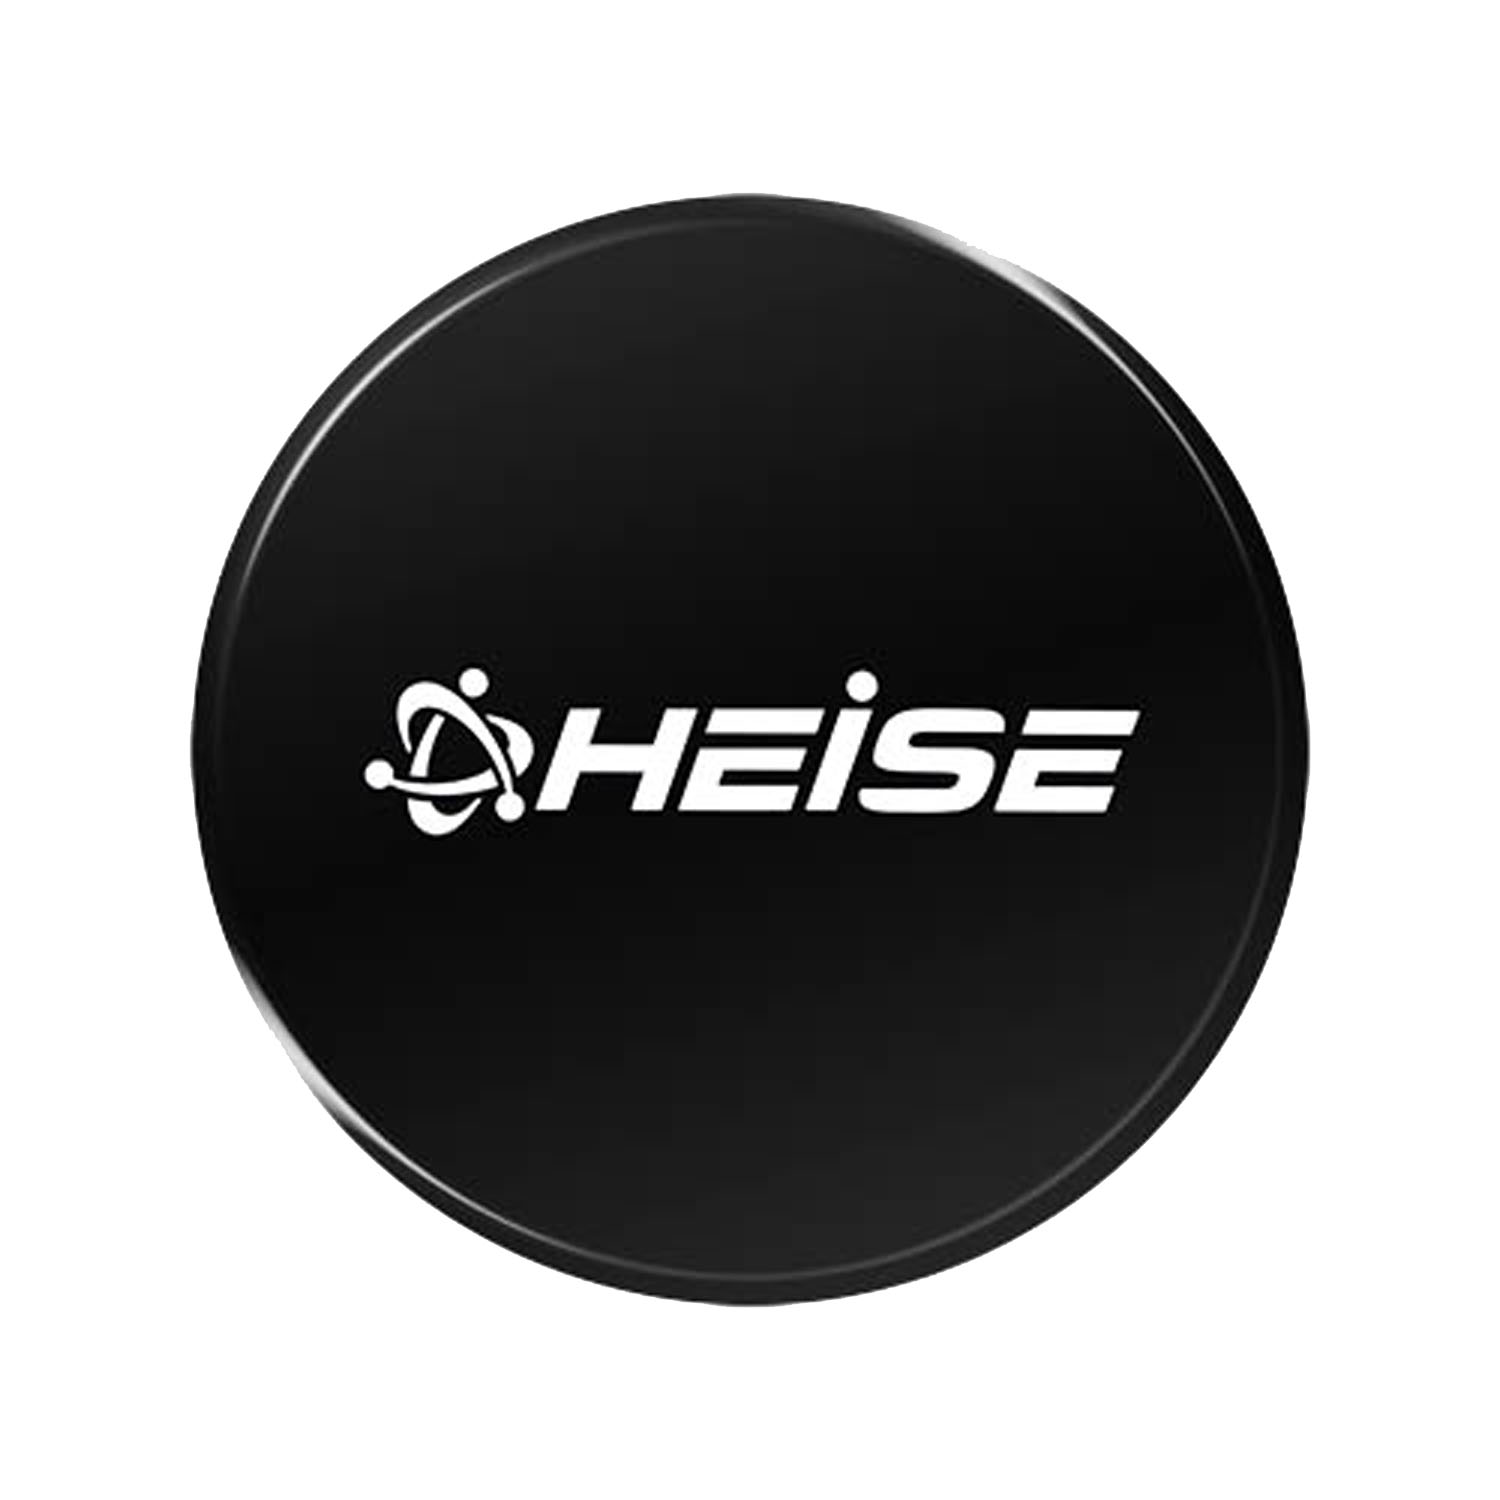 HEISE - 7" SINGLE POLYCARBONATE REPLACEMENT LENS COVER FOR MODELS HEDL4 & HEDL6 LIGHTS (BLACK)